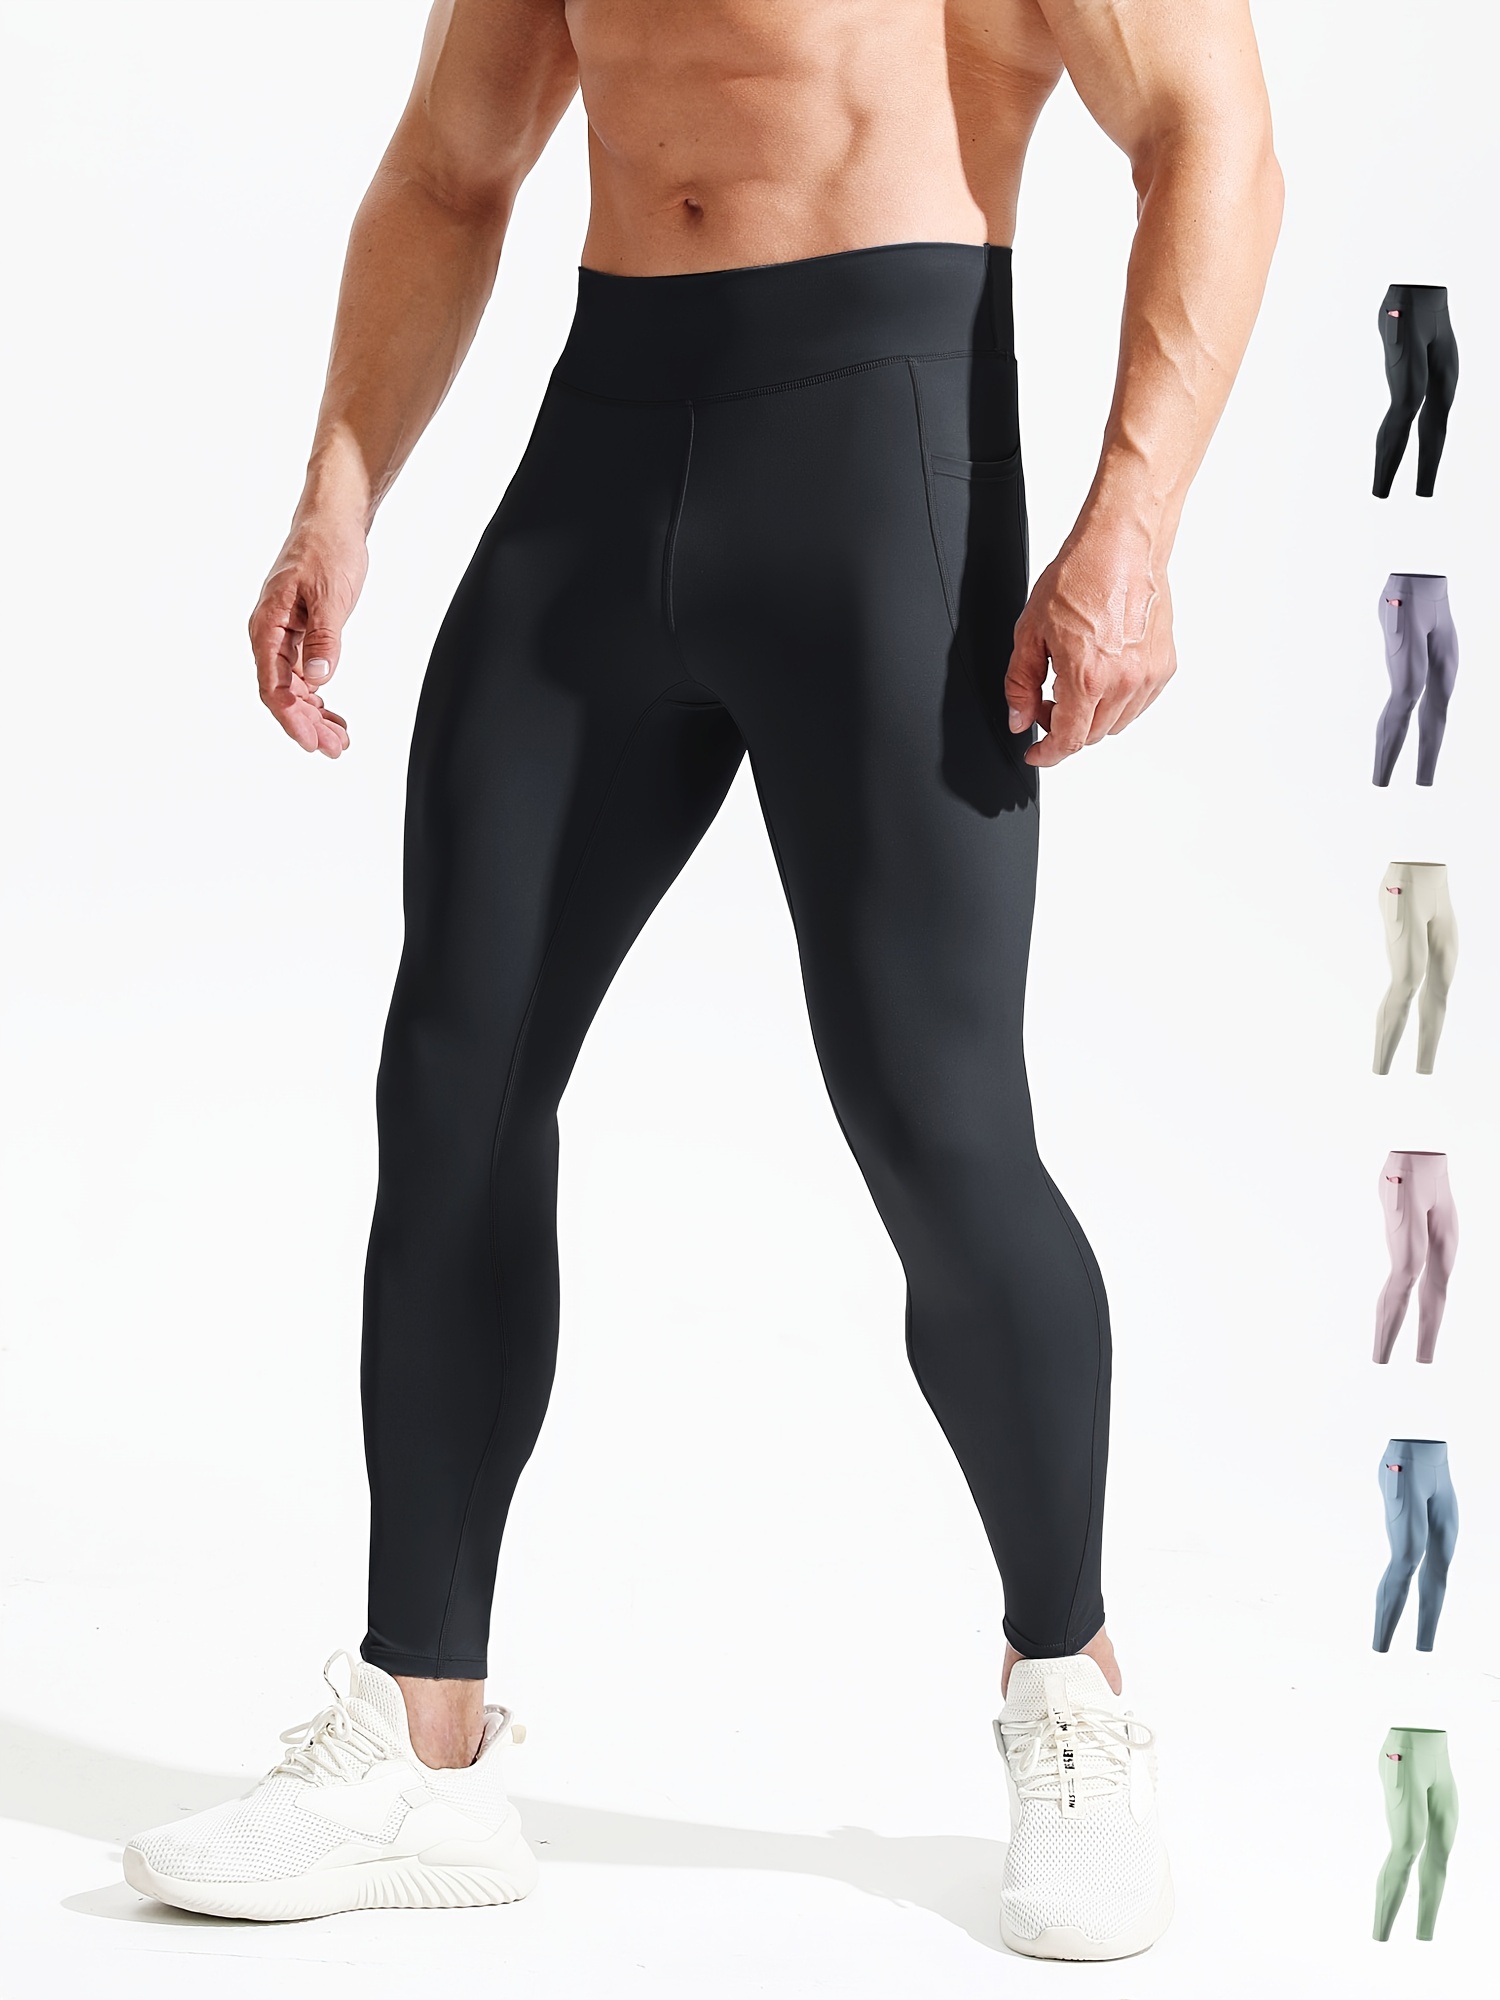 Mens Deluxe Black High-shine High Performance Gym Leggings, Stretchy  Spandex Gym Wear, Men's Running Cycling Clothes, Stylish Mens Gym Wear 